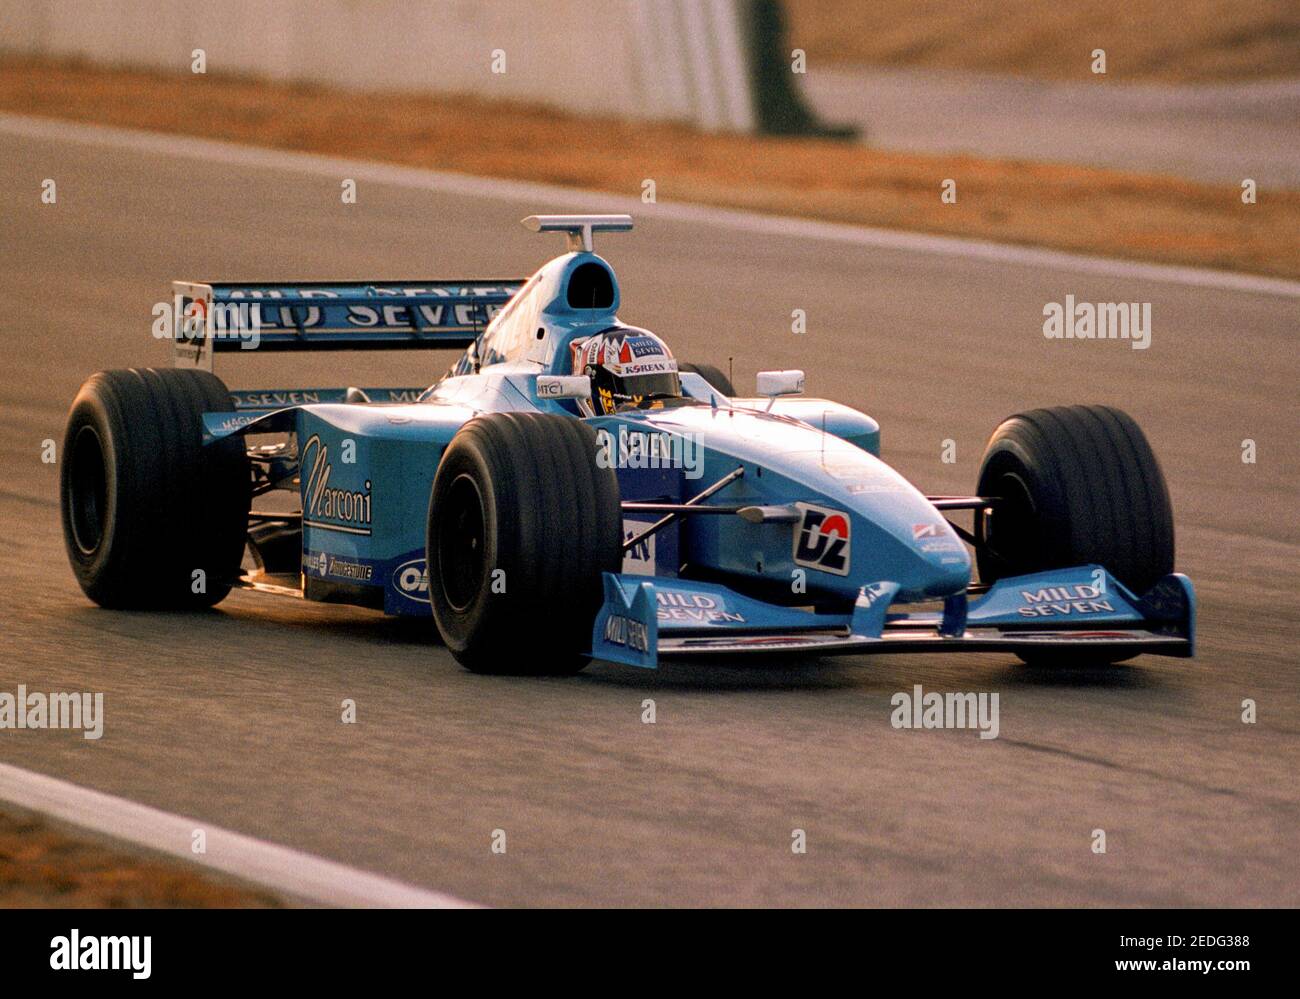 Benetton Formula One Fotos e Imágenes de stock - Alamy